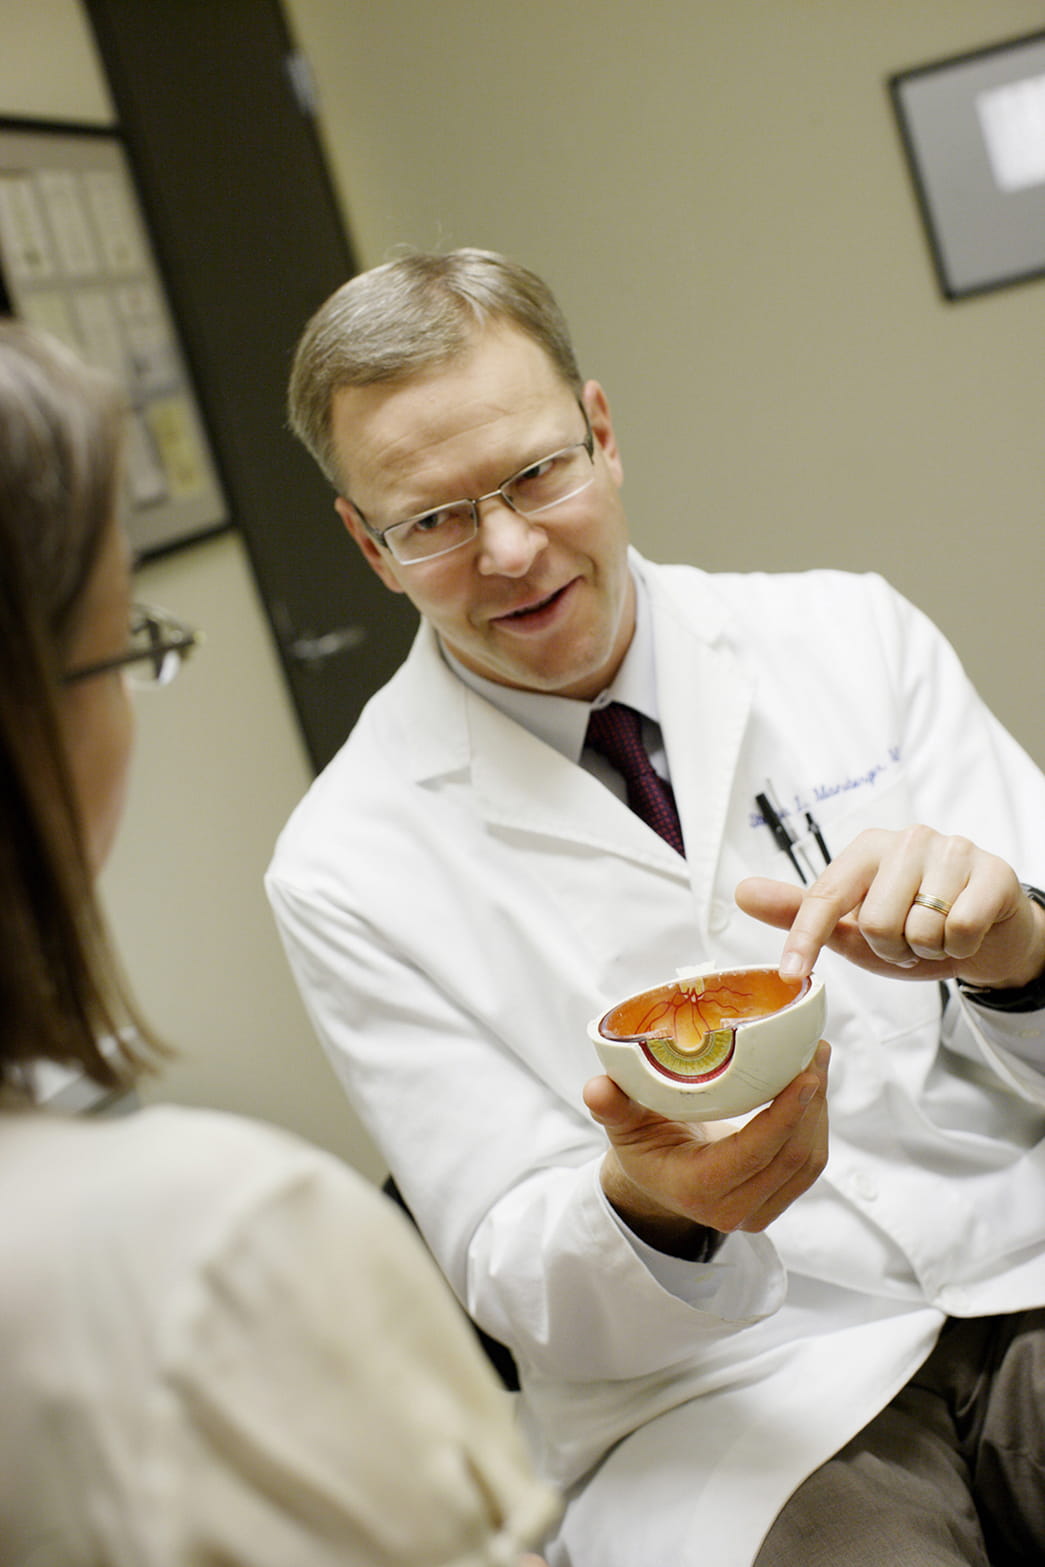 Dr. Steve Mansberger explains damage caused by glaucoma